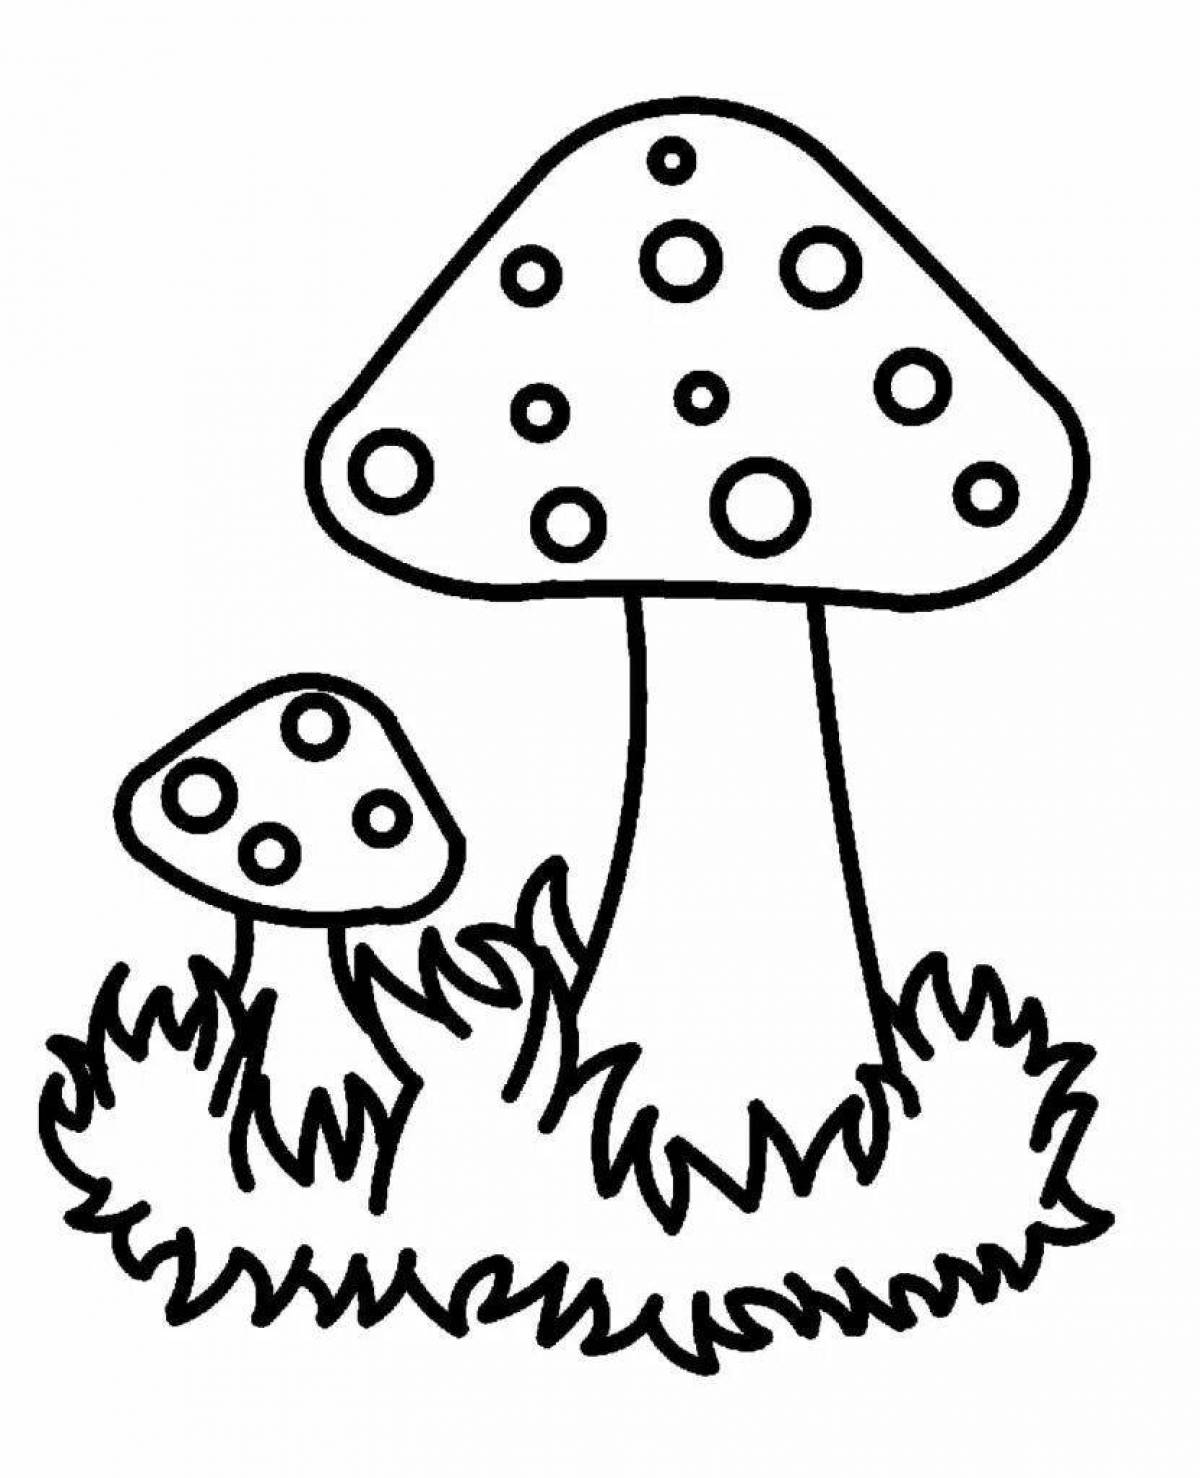 Fancy mushroom coloring for kids